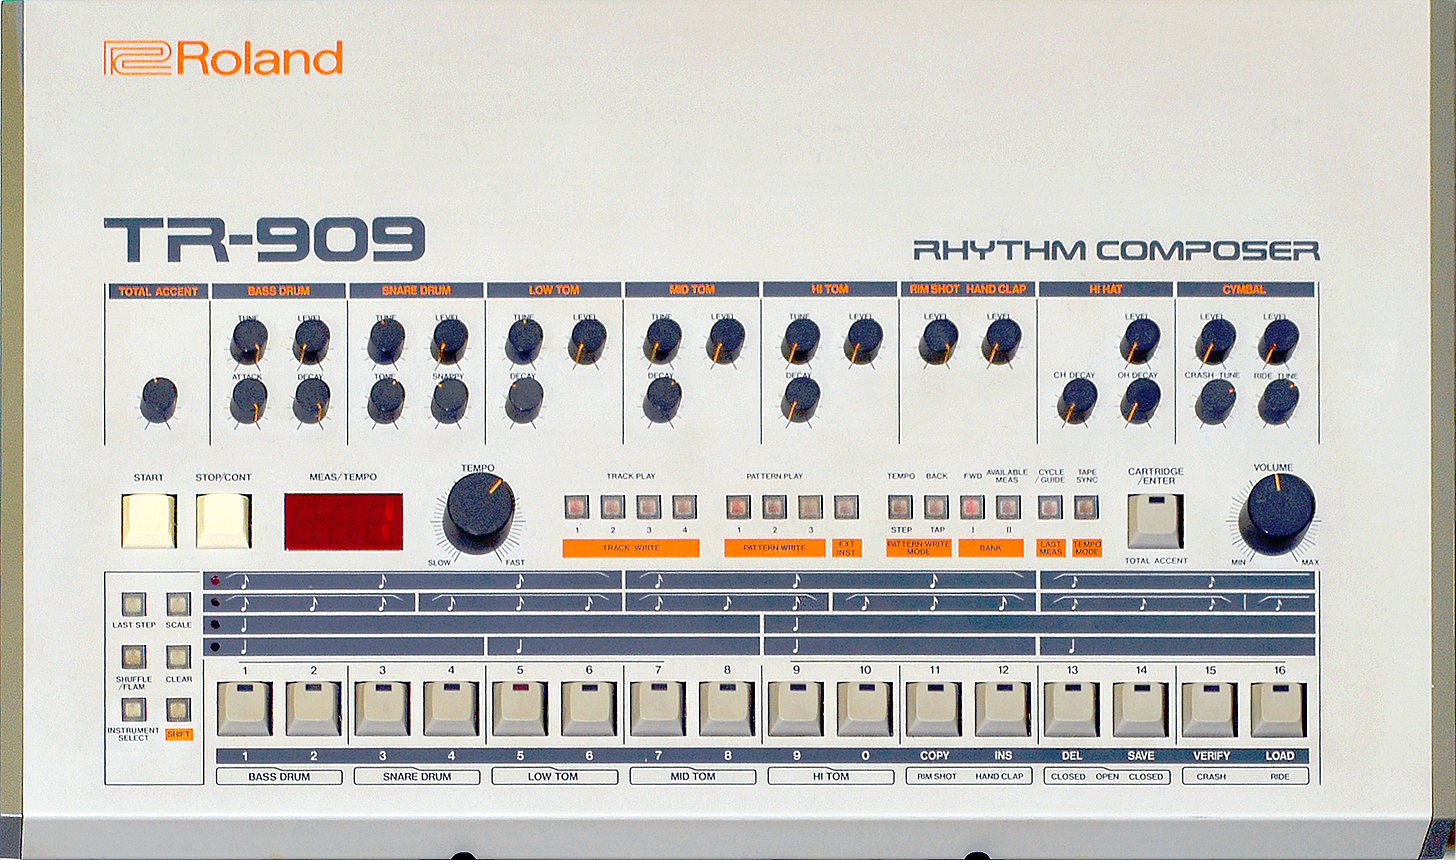 Roland TR-909 - Wikipedia